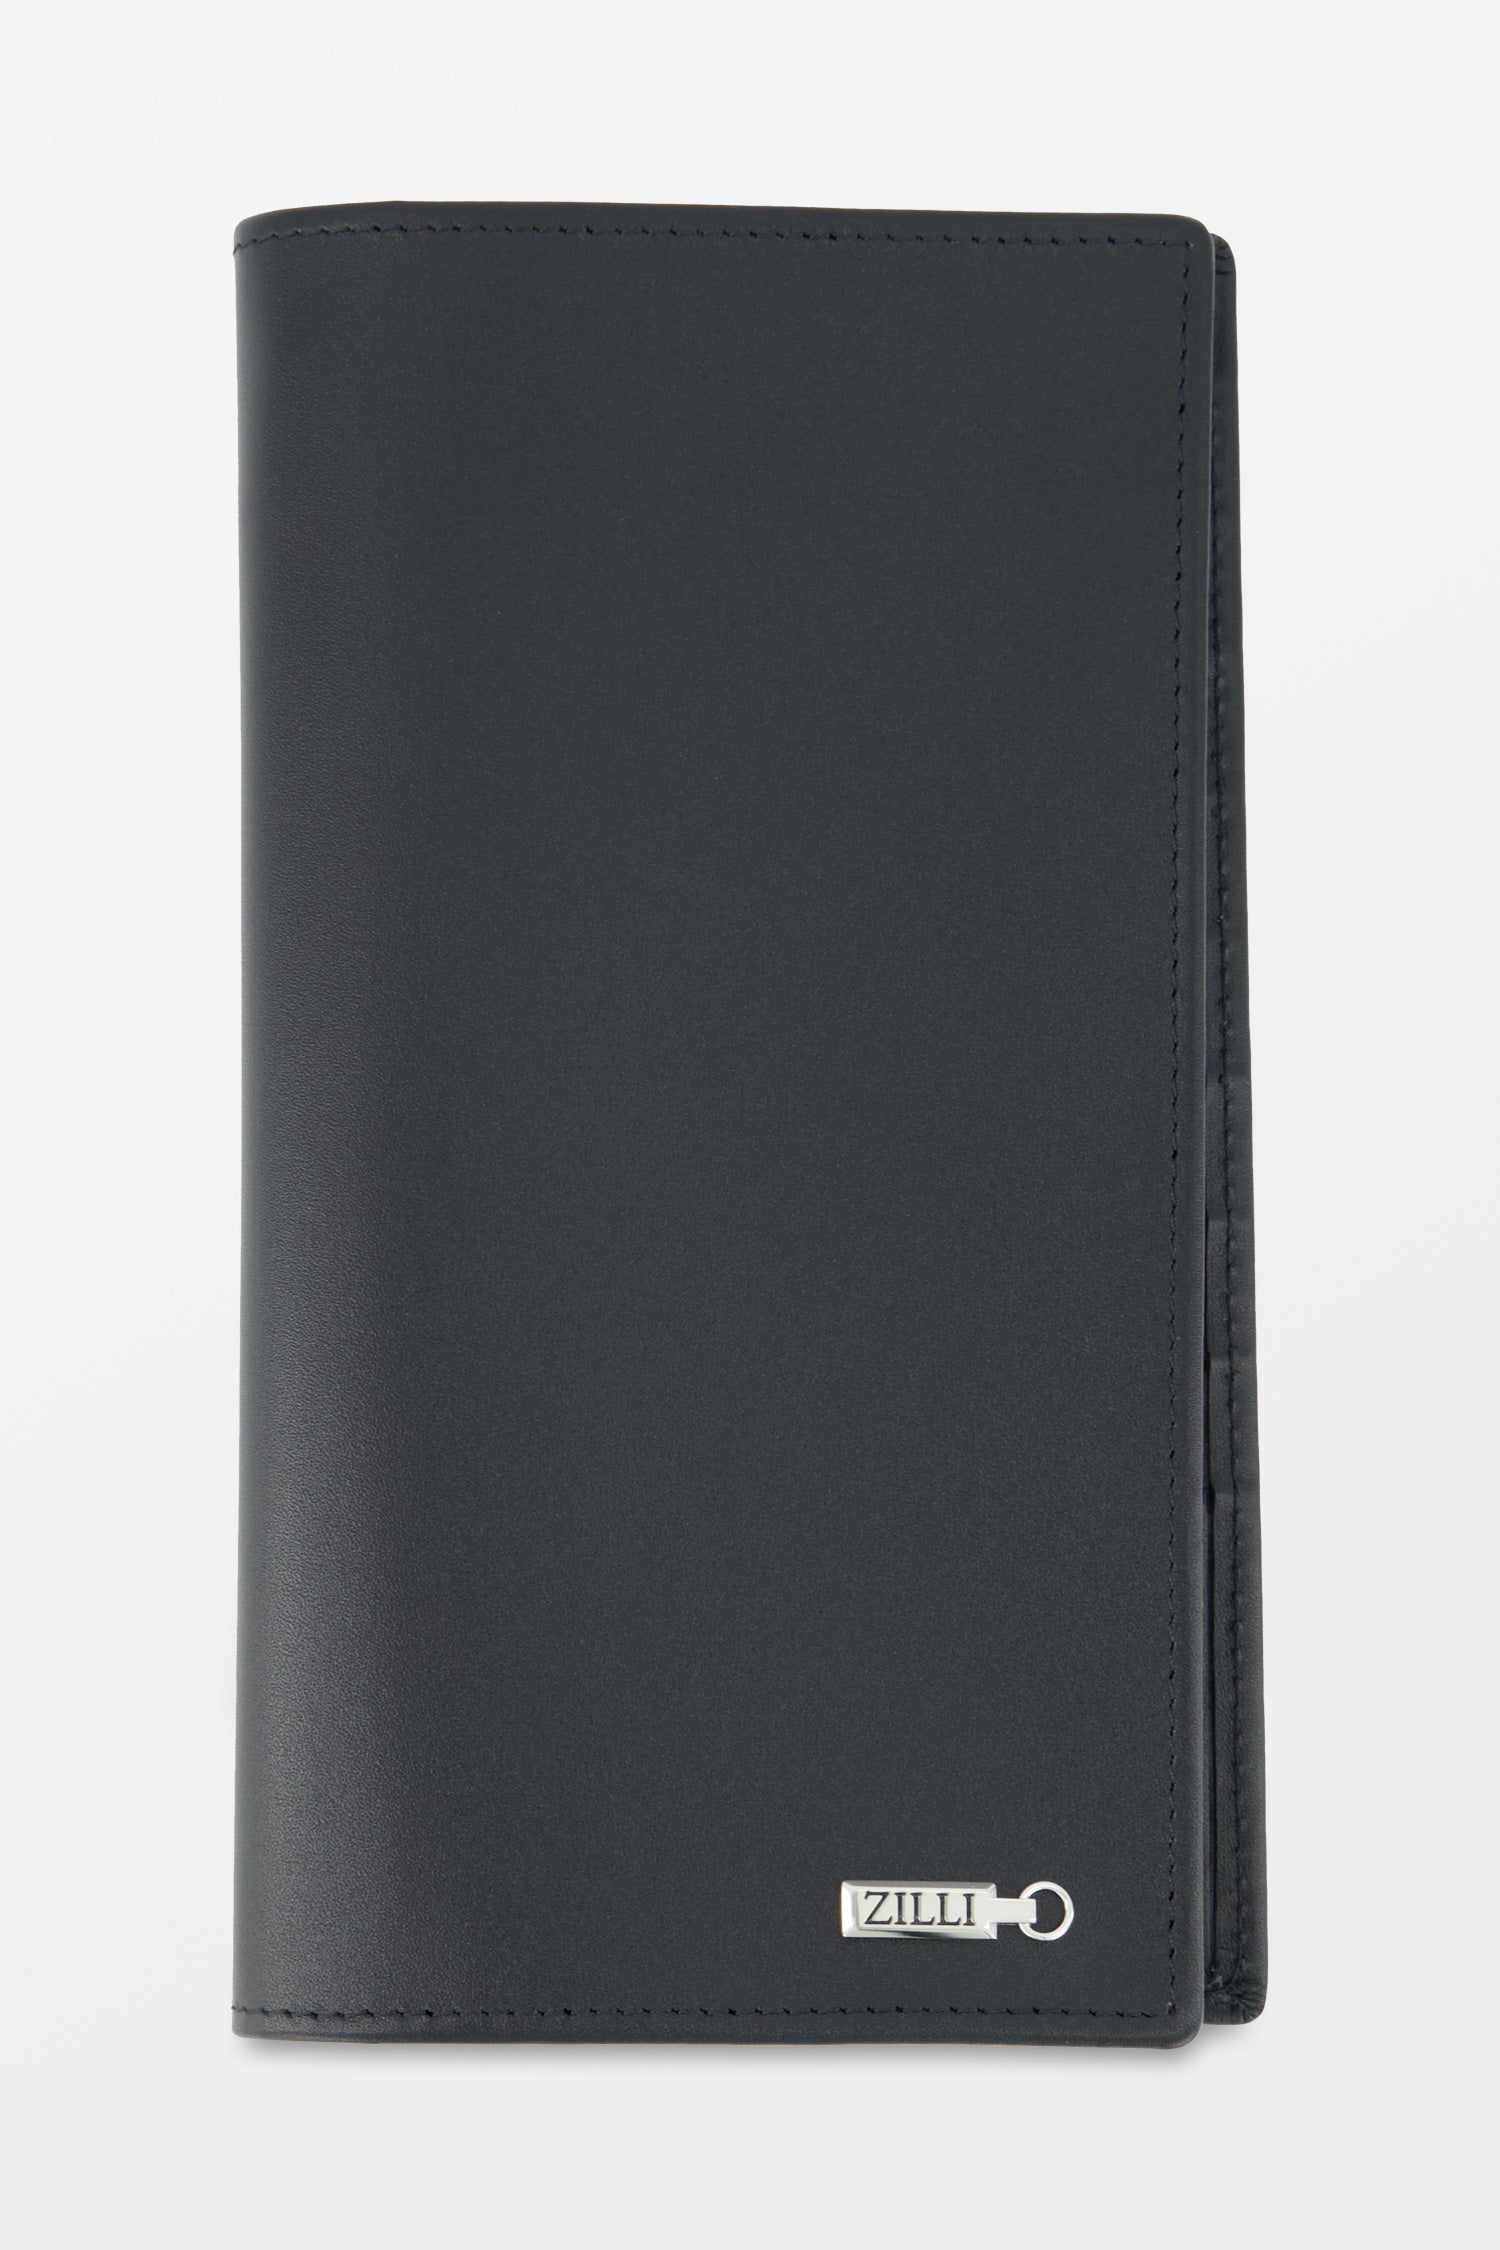 Zilli Black International Wallet With Inner Zipped Box